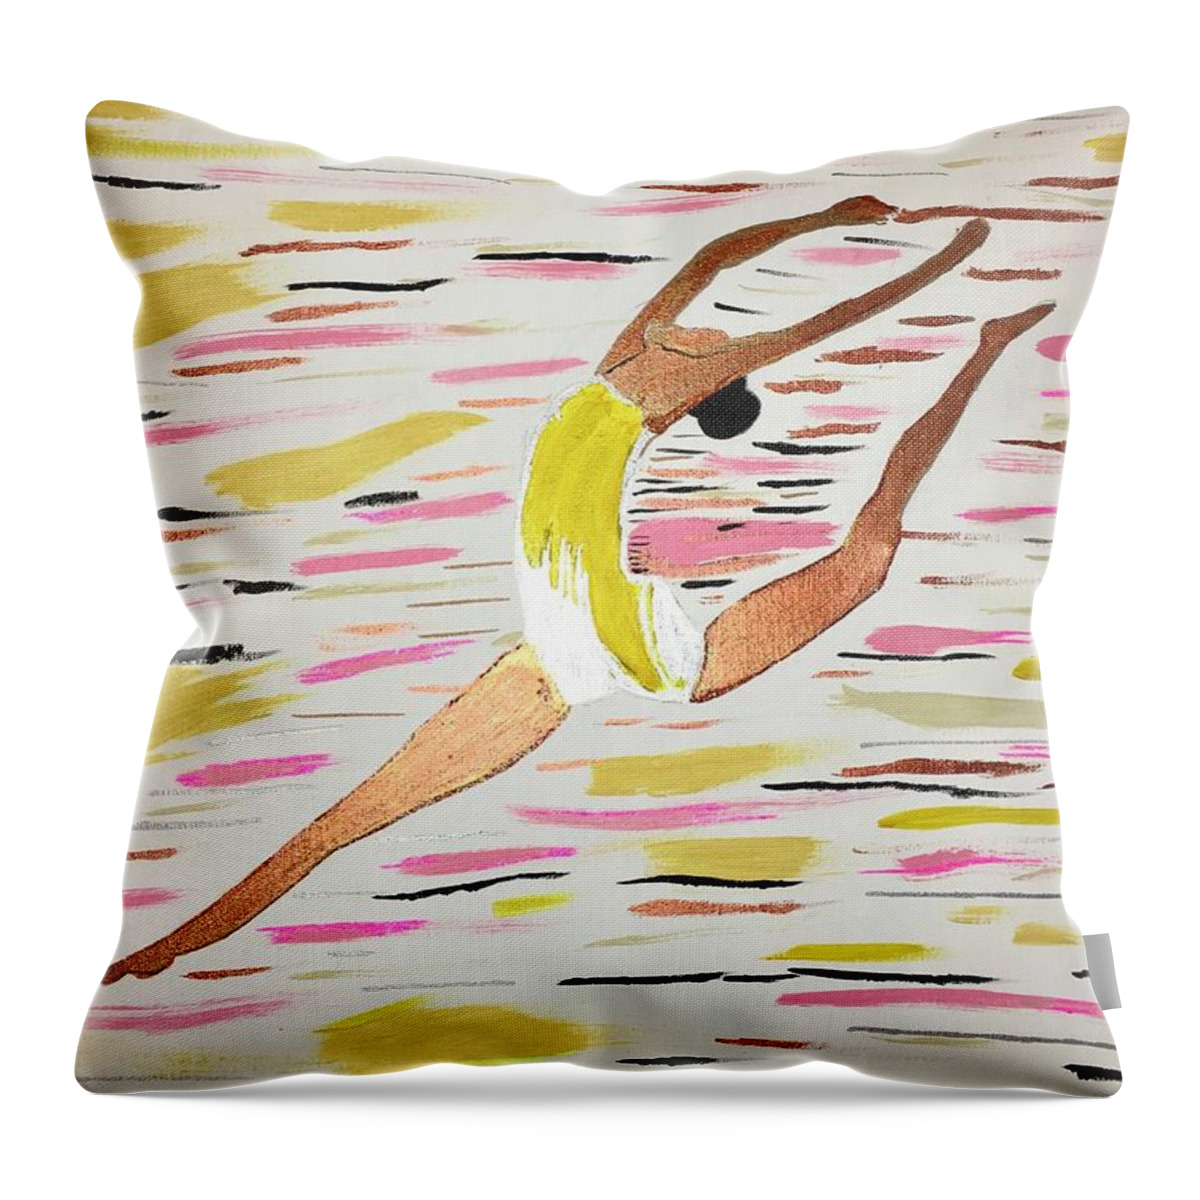 Dance Pose Throw Pillow featuring the mixed media Leap #1 by Tara Rocker